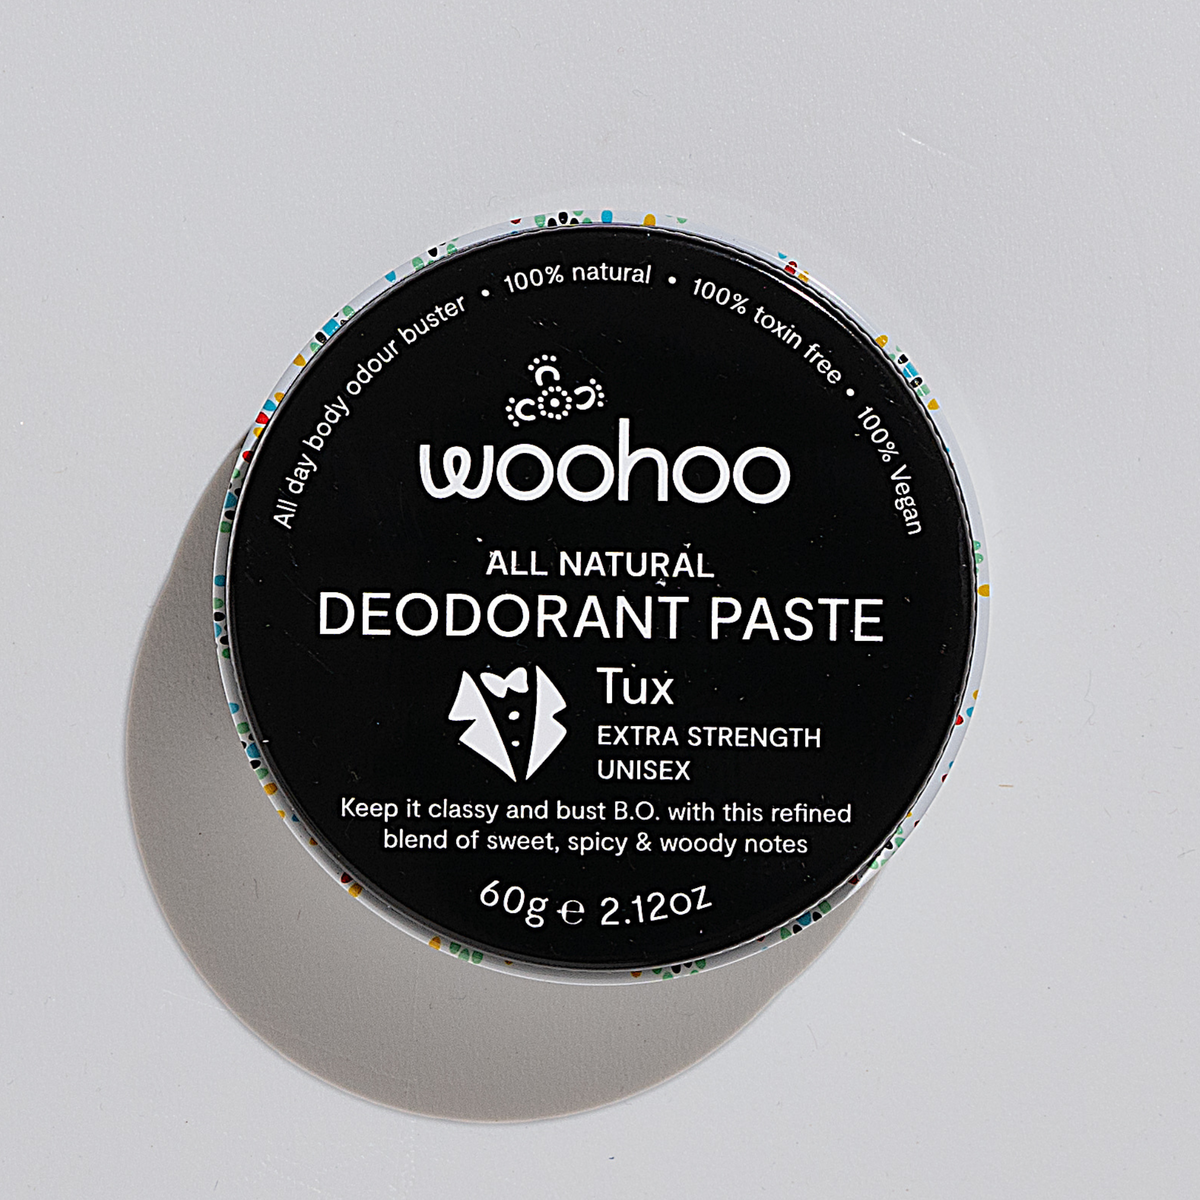 Woohoo All Natural Deodorant Paste (Tux) 60g